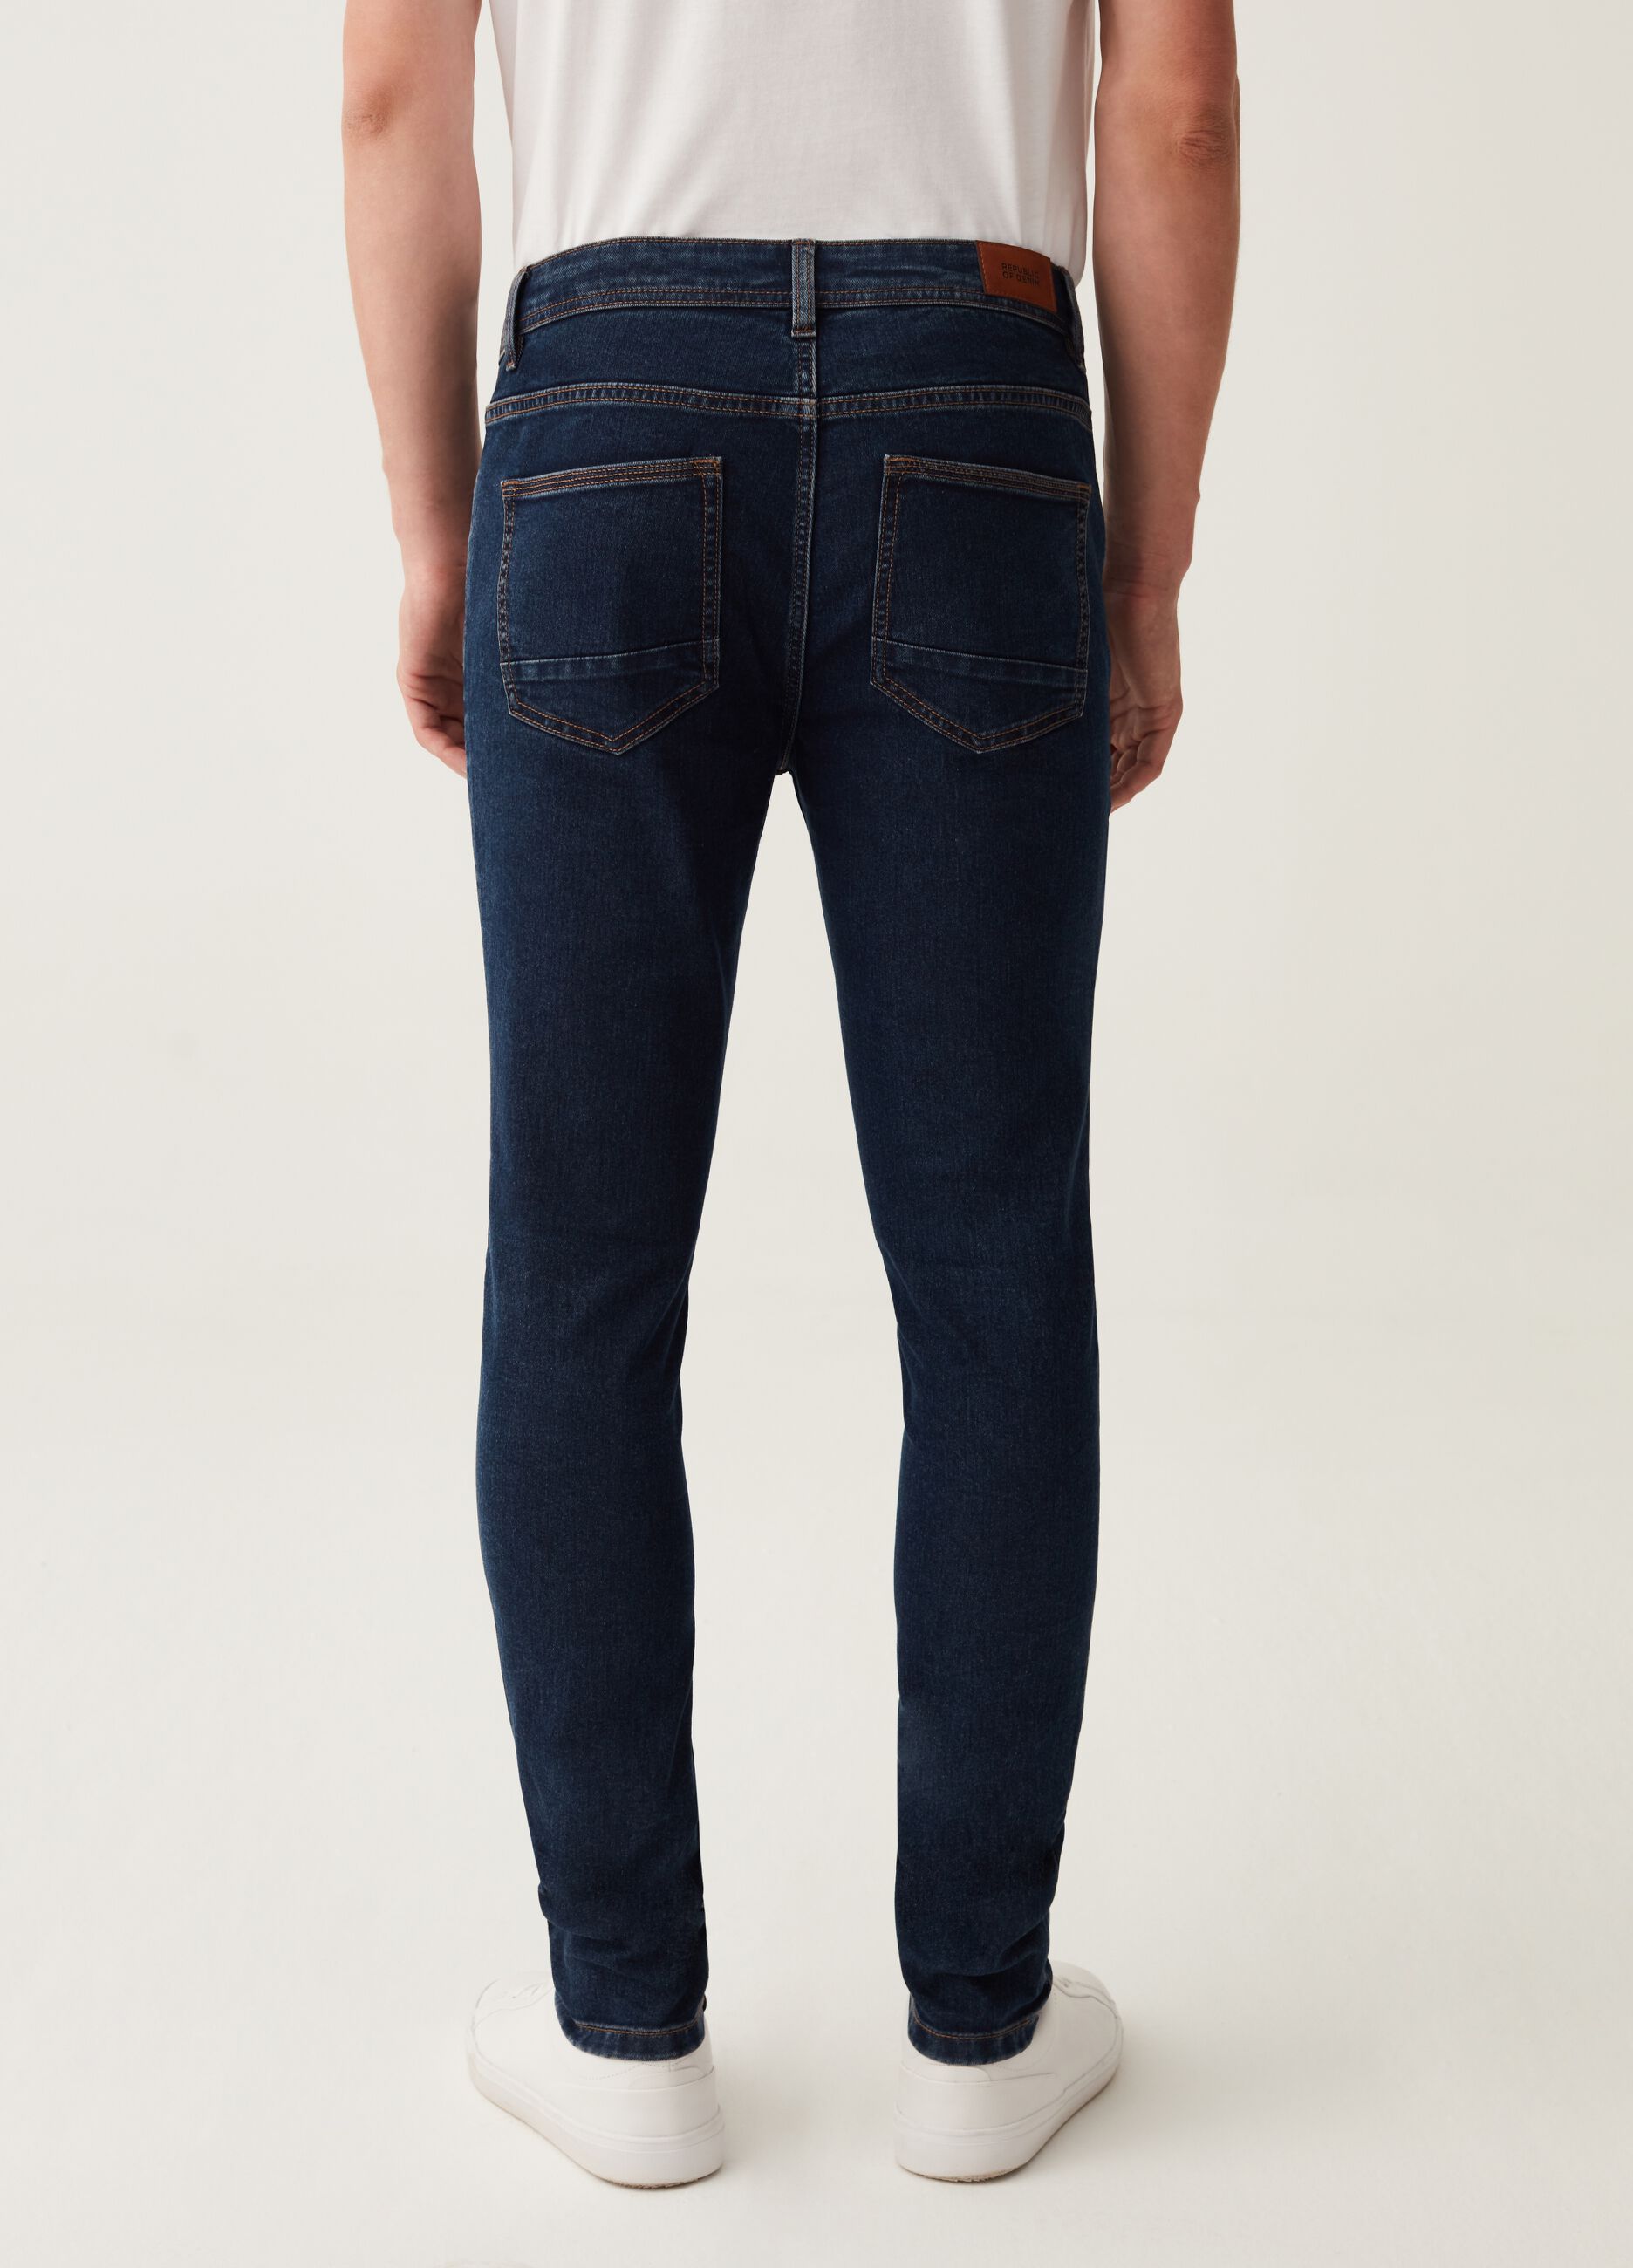 Jeans super skinny fit cinque tasche_2